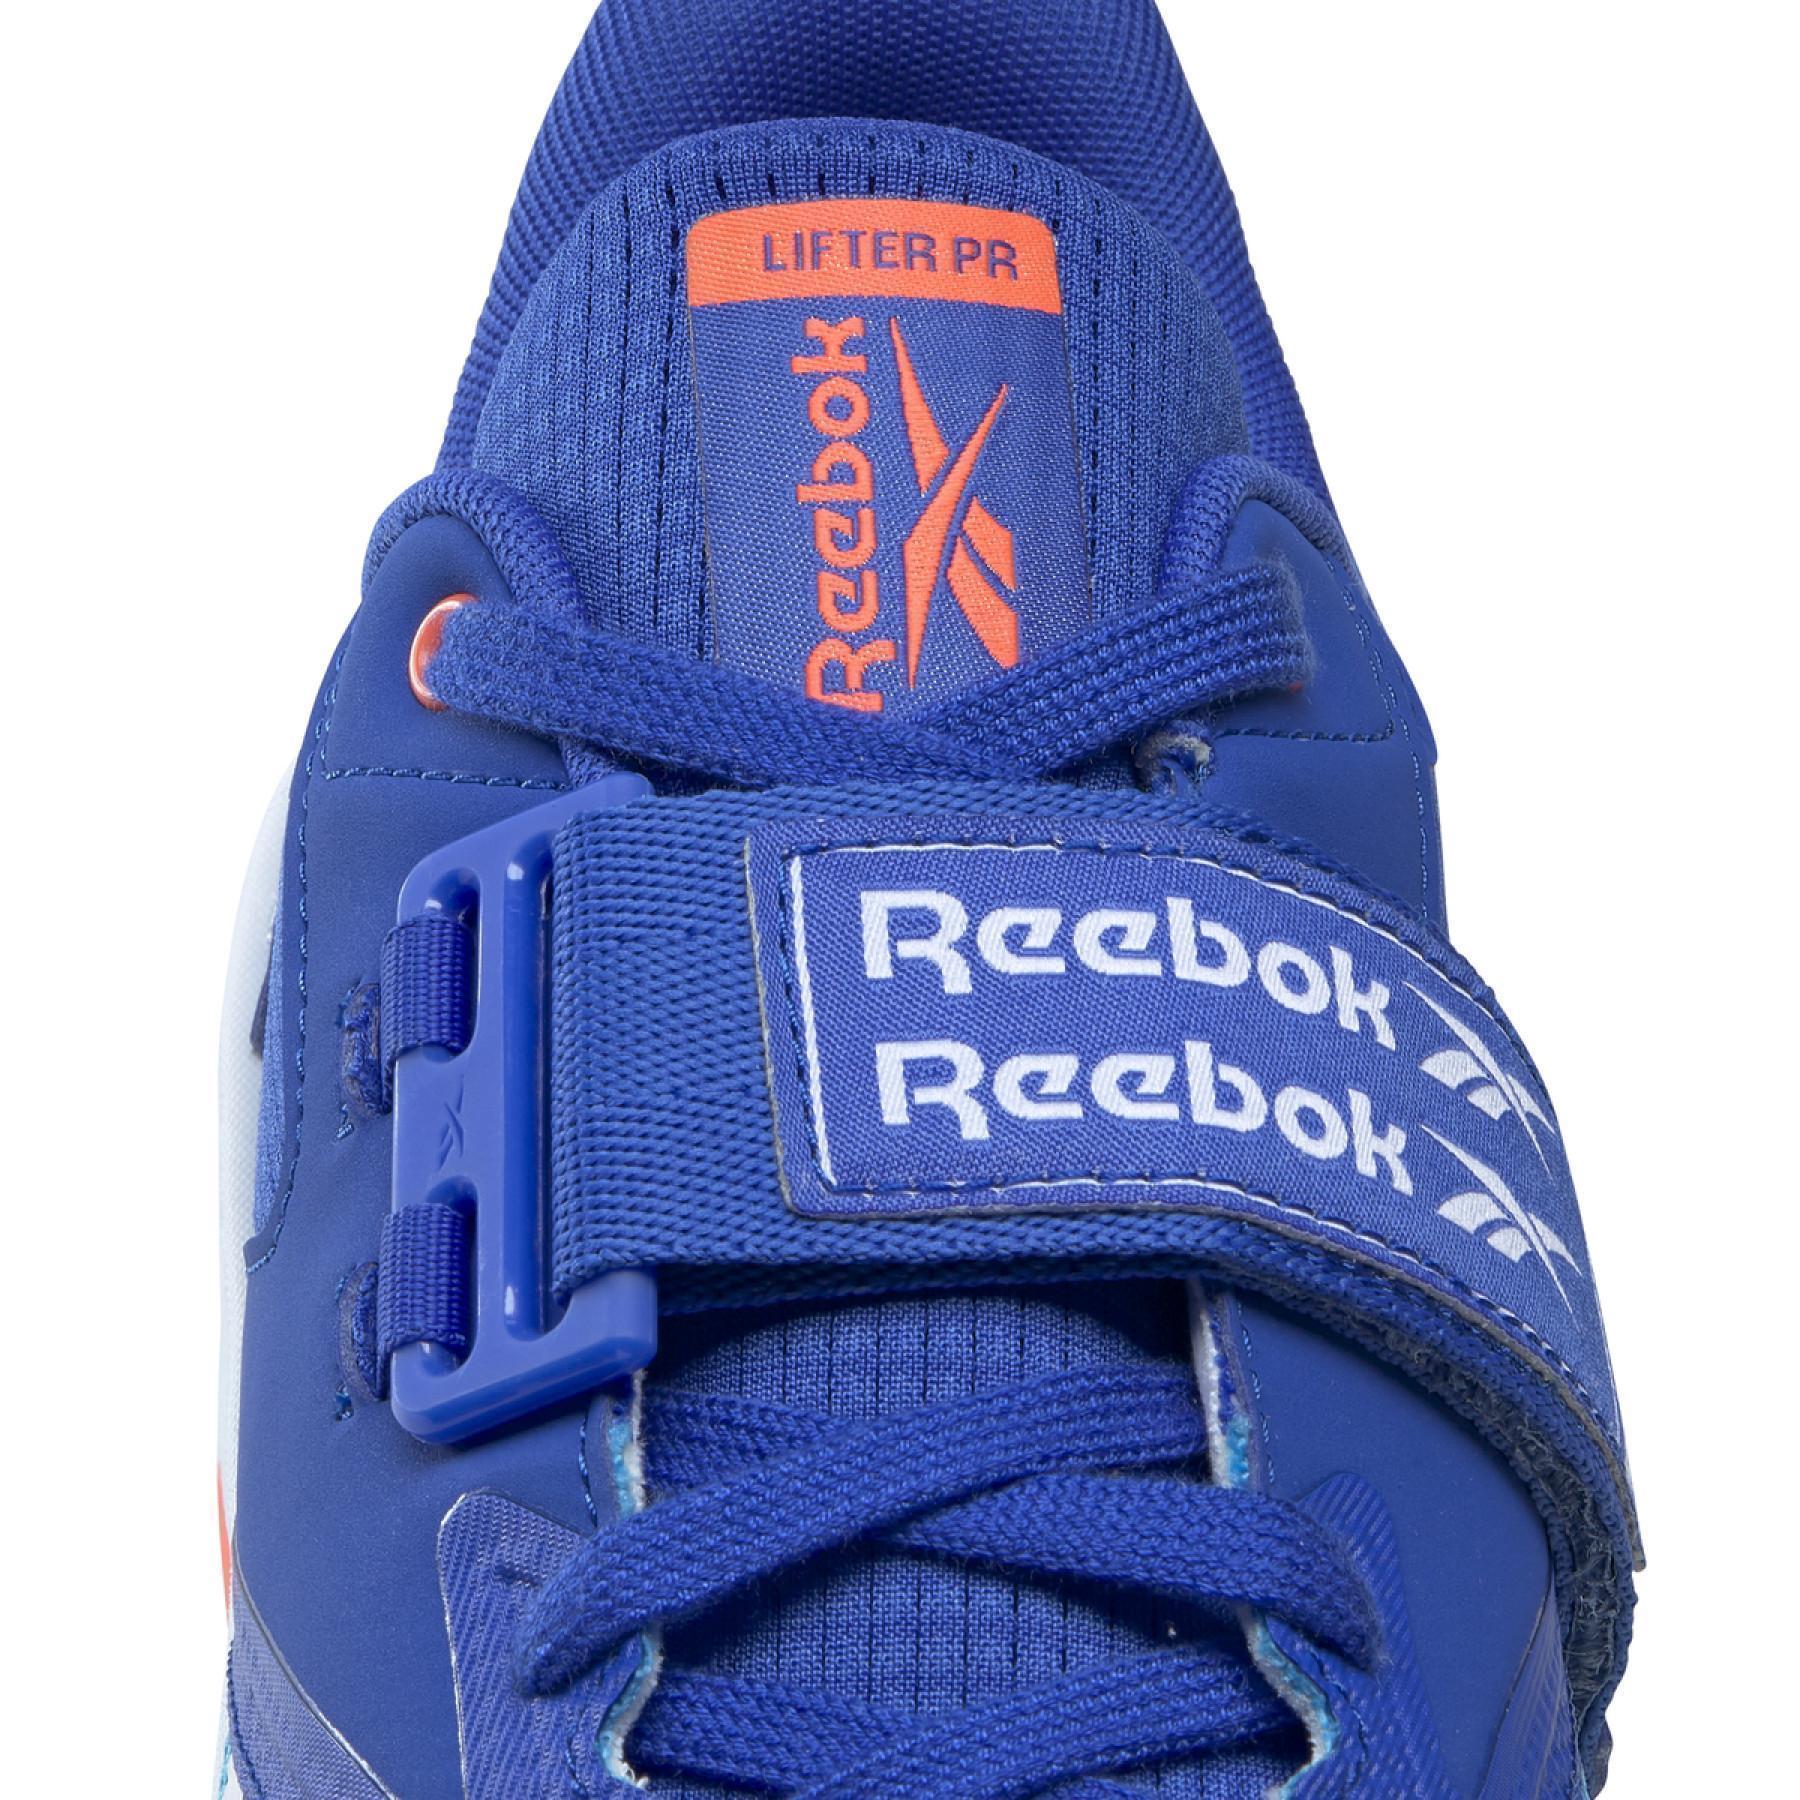 Sapatos Reebok Lifter PR II